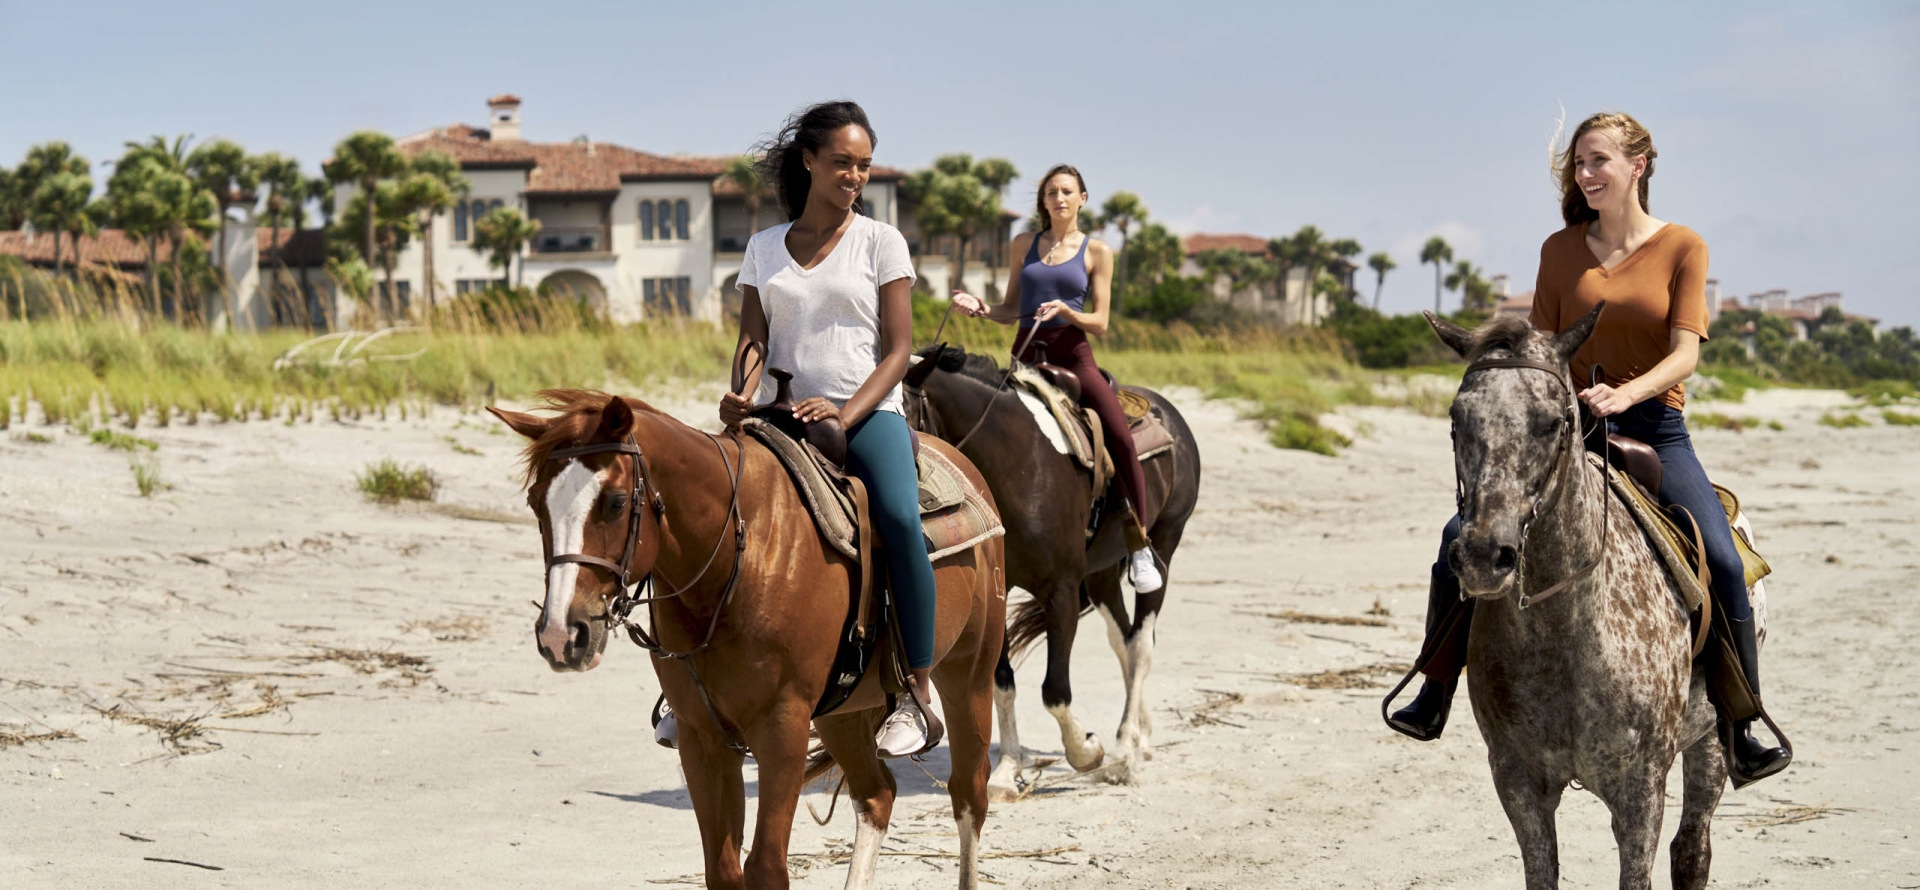 Women Riding Horses Sea Island